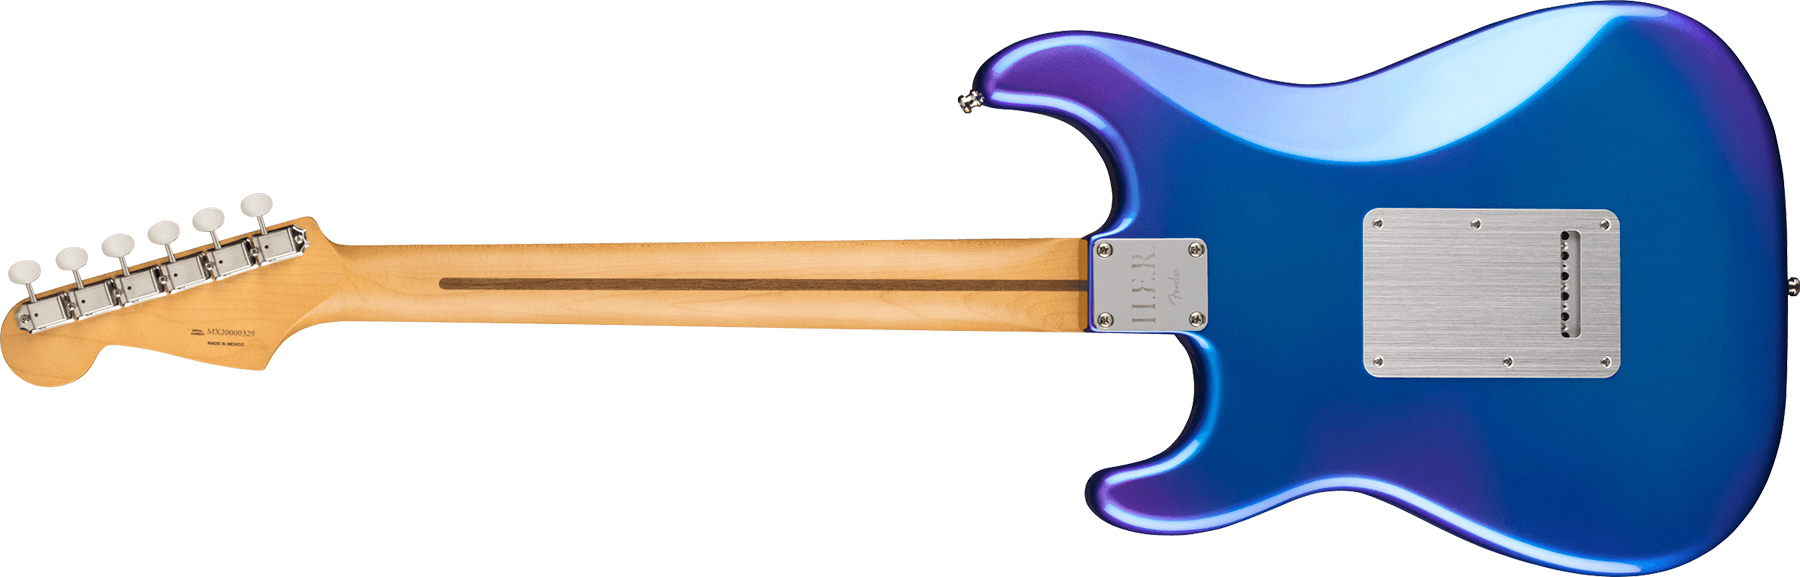 Fender H.e.r. Strat Ltd Signature Mex 3s Trem Mn - Blue Marlin - E-Gitarre in Str-Form - Variation 1